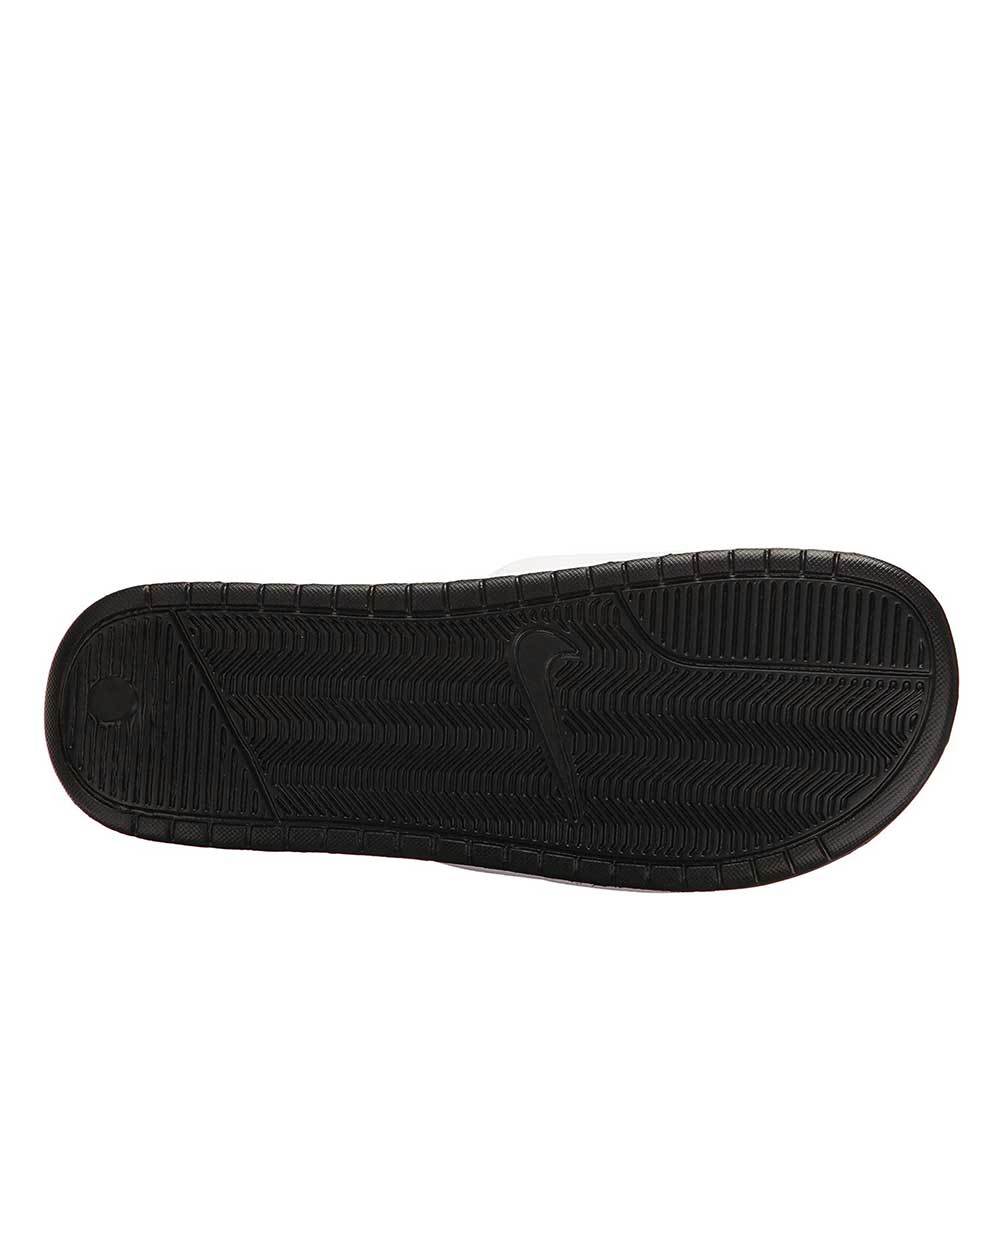 Nike Benassi White and Black Flip-Flops